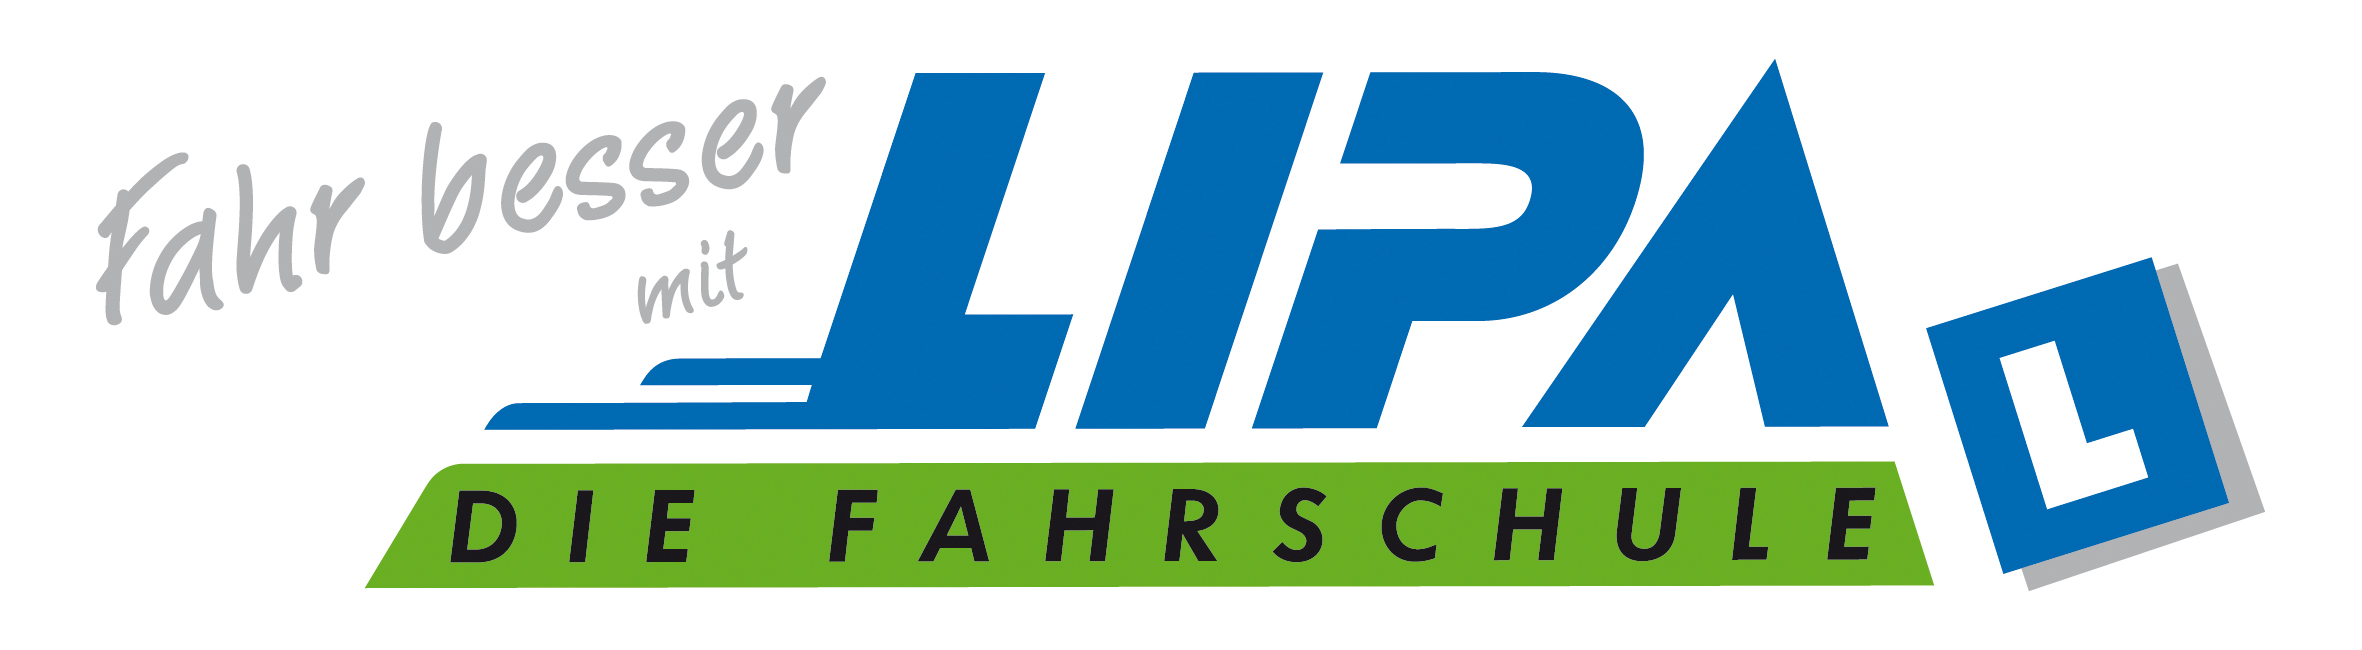 HS Fahrschulservice GmbH - Fahrschule LIPA, Inh. Ing. Krejci